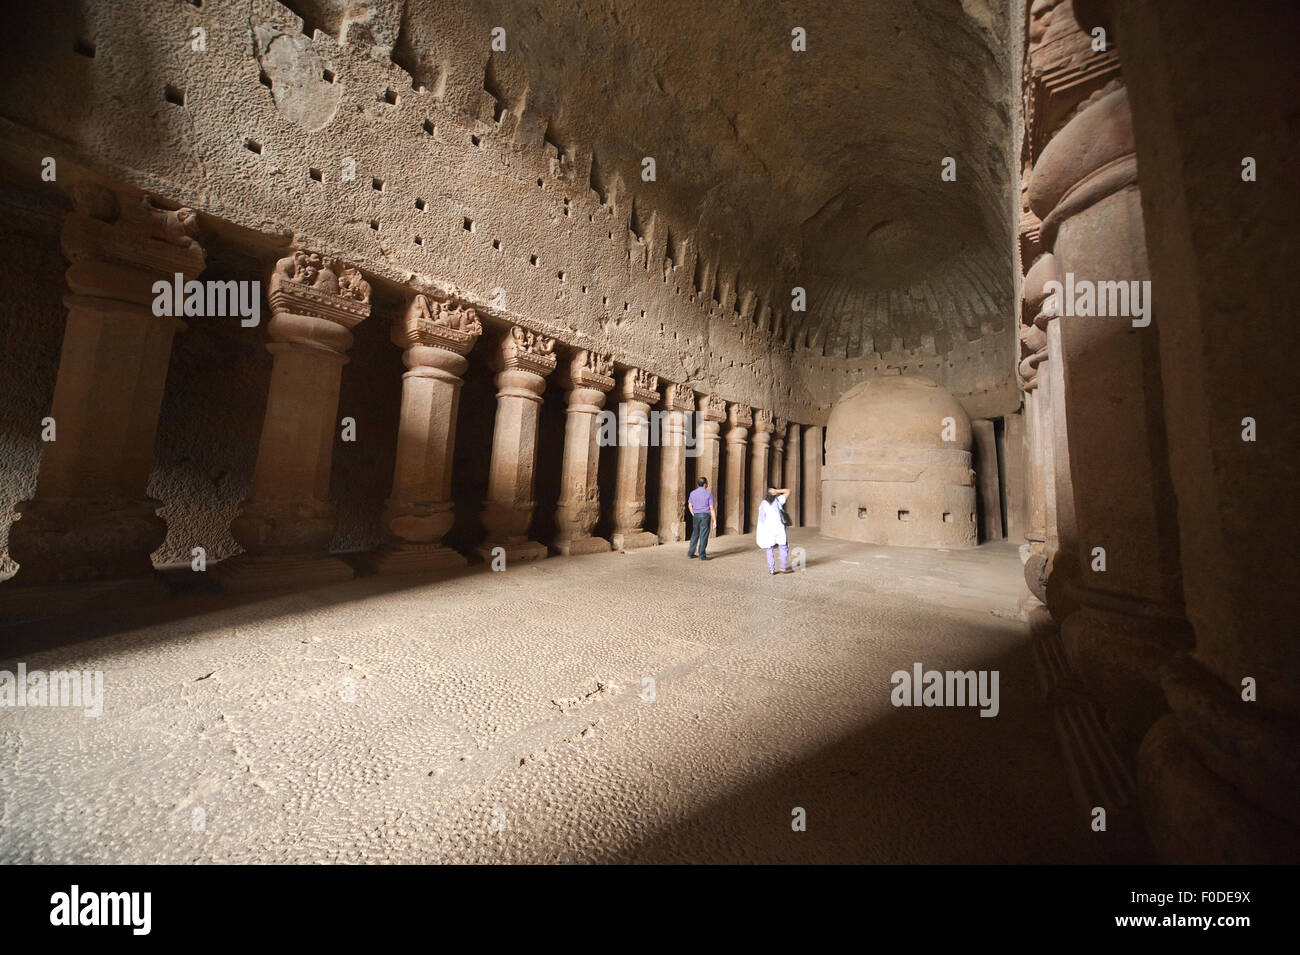 The Kanheri cave No 3, was shot in Sanjay Gandhi national park, Mumbai, India Stock Photo